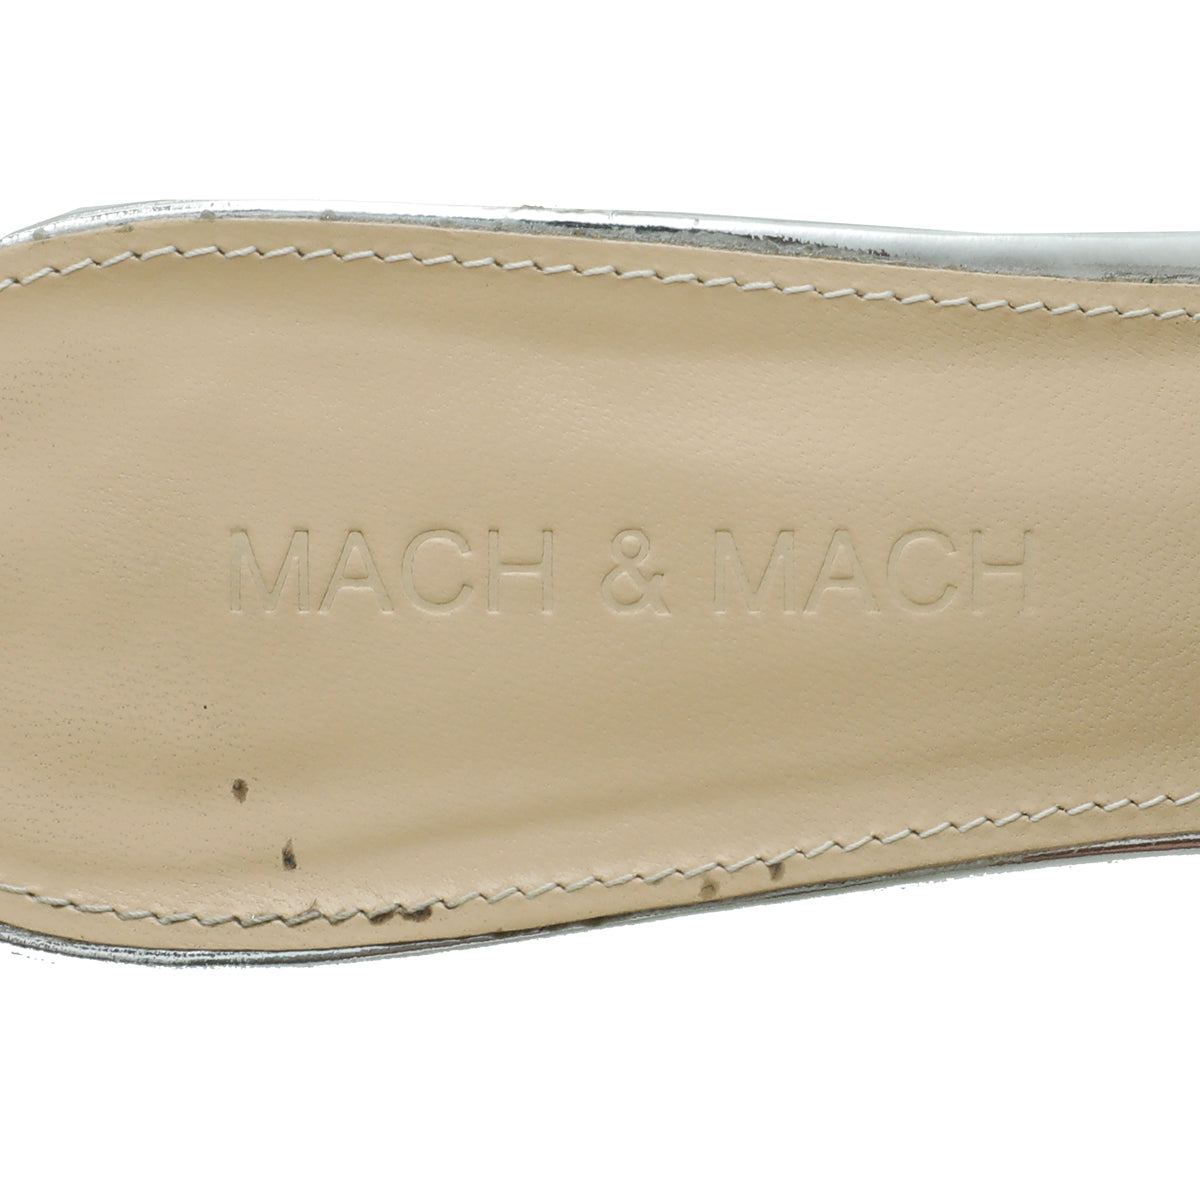 Mach & Mach Bicolor Crystal Embellished PVC Mules 36.5